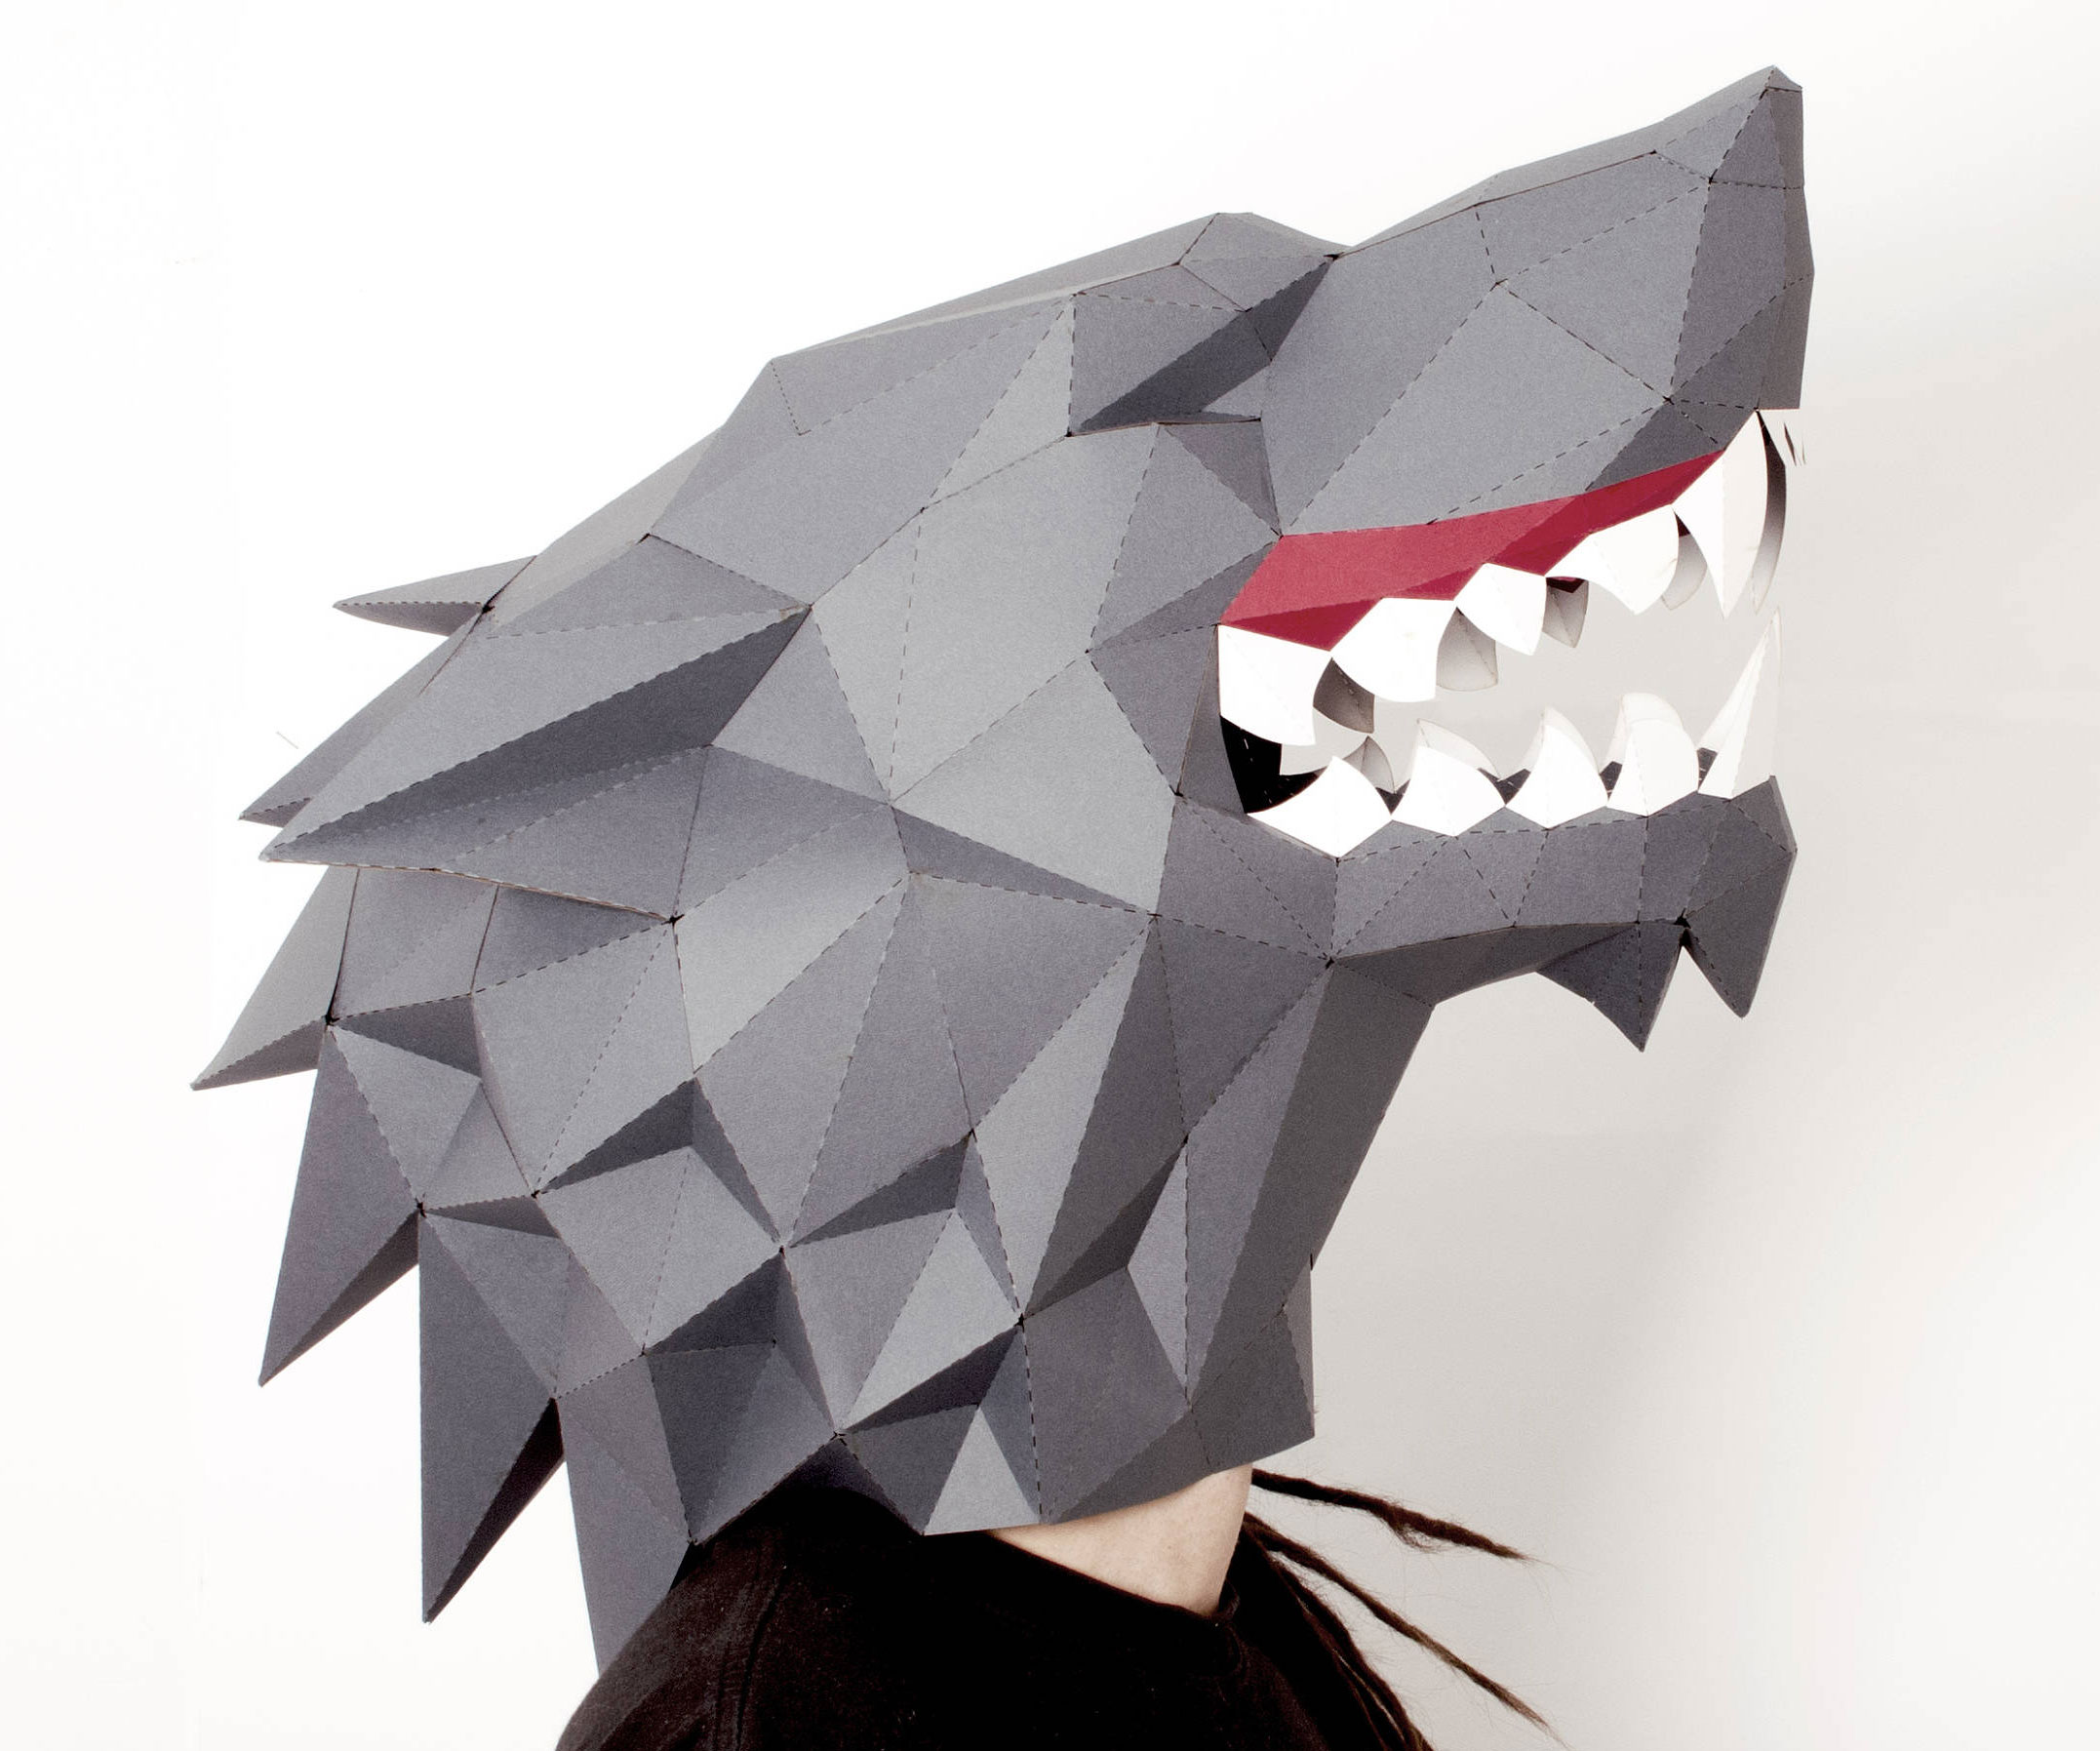 DIY Direwolf Paper Mask